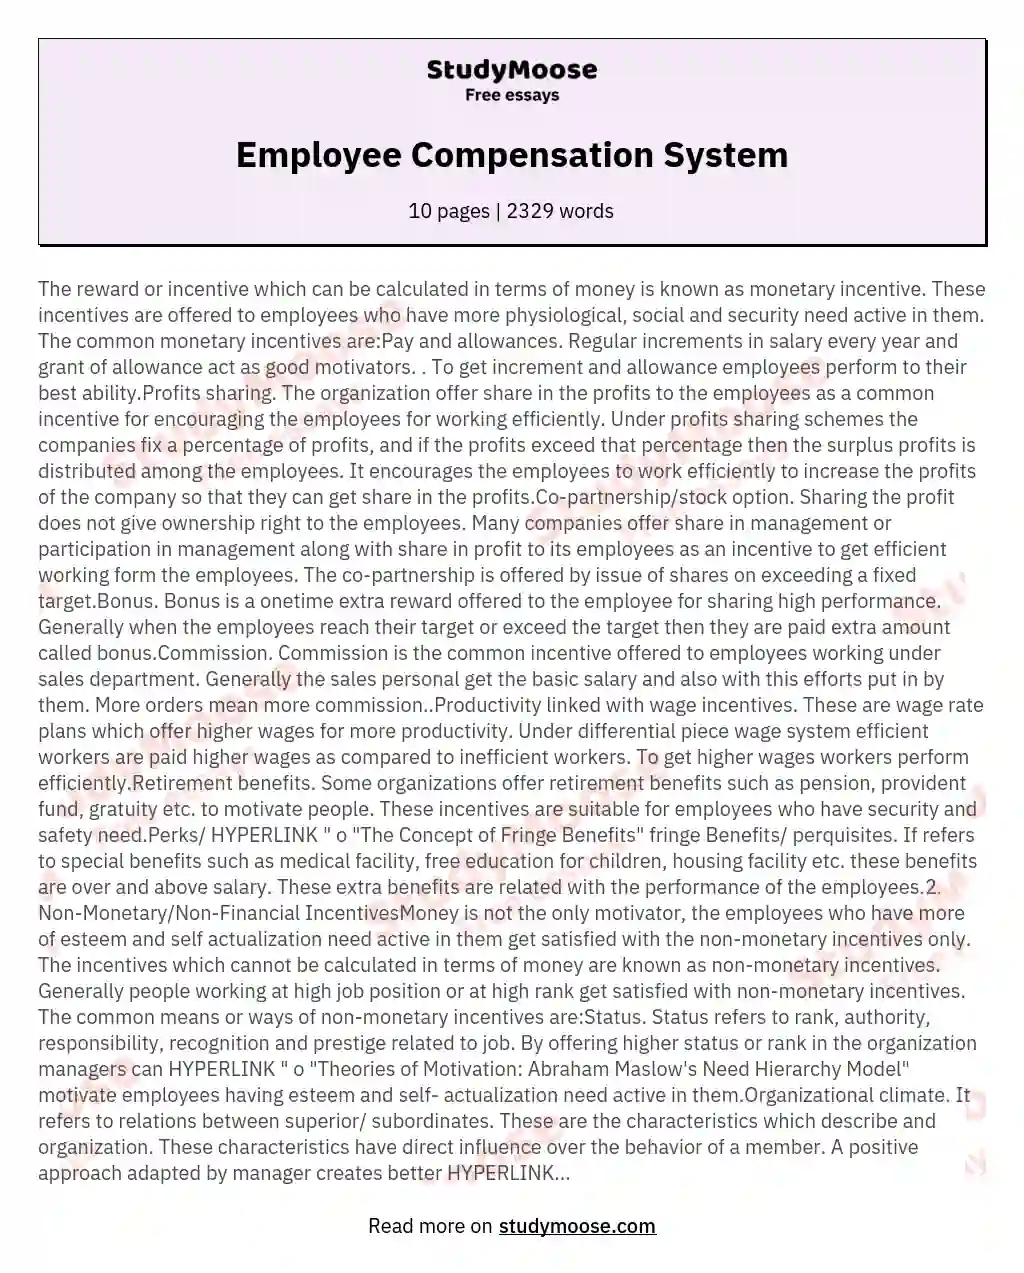 Employee Compensation System essay